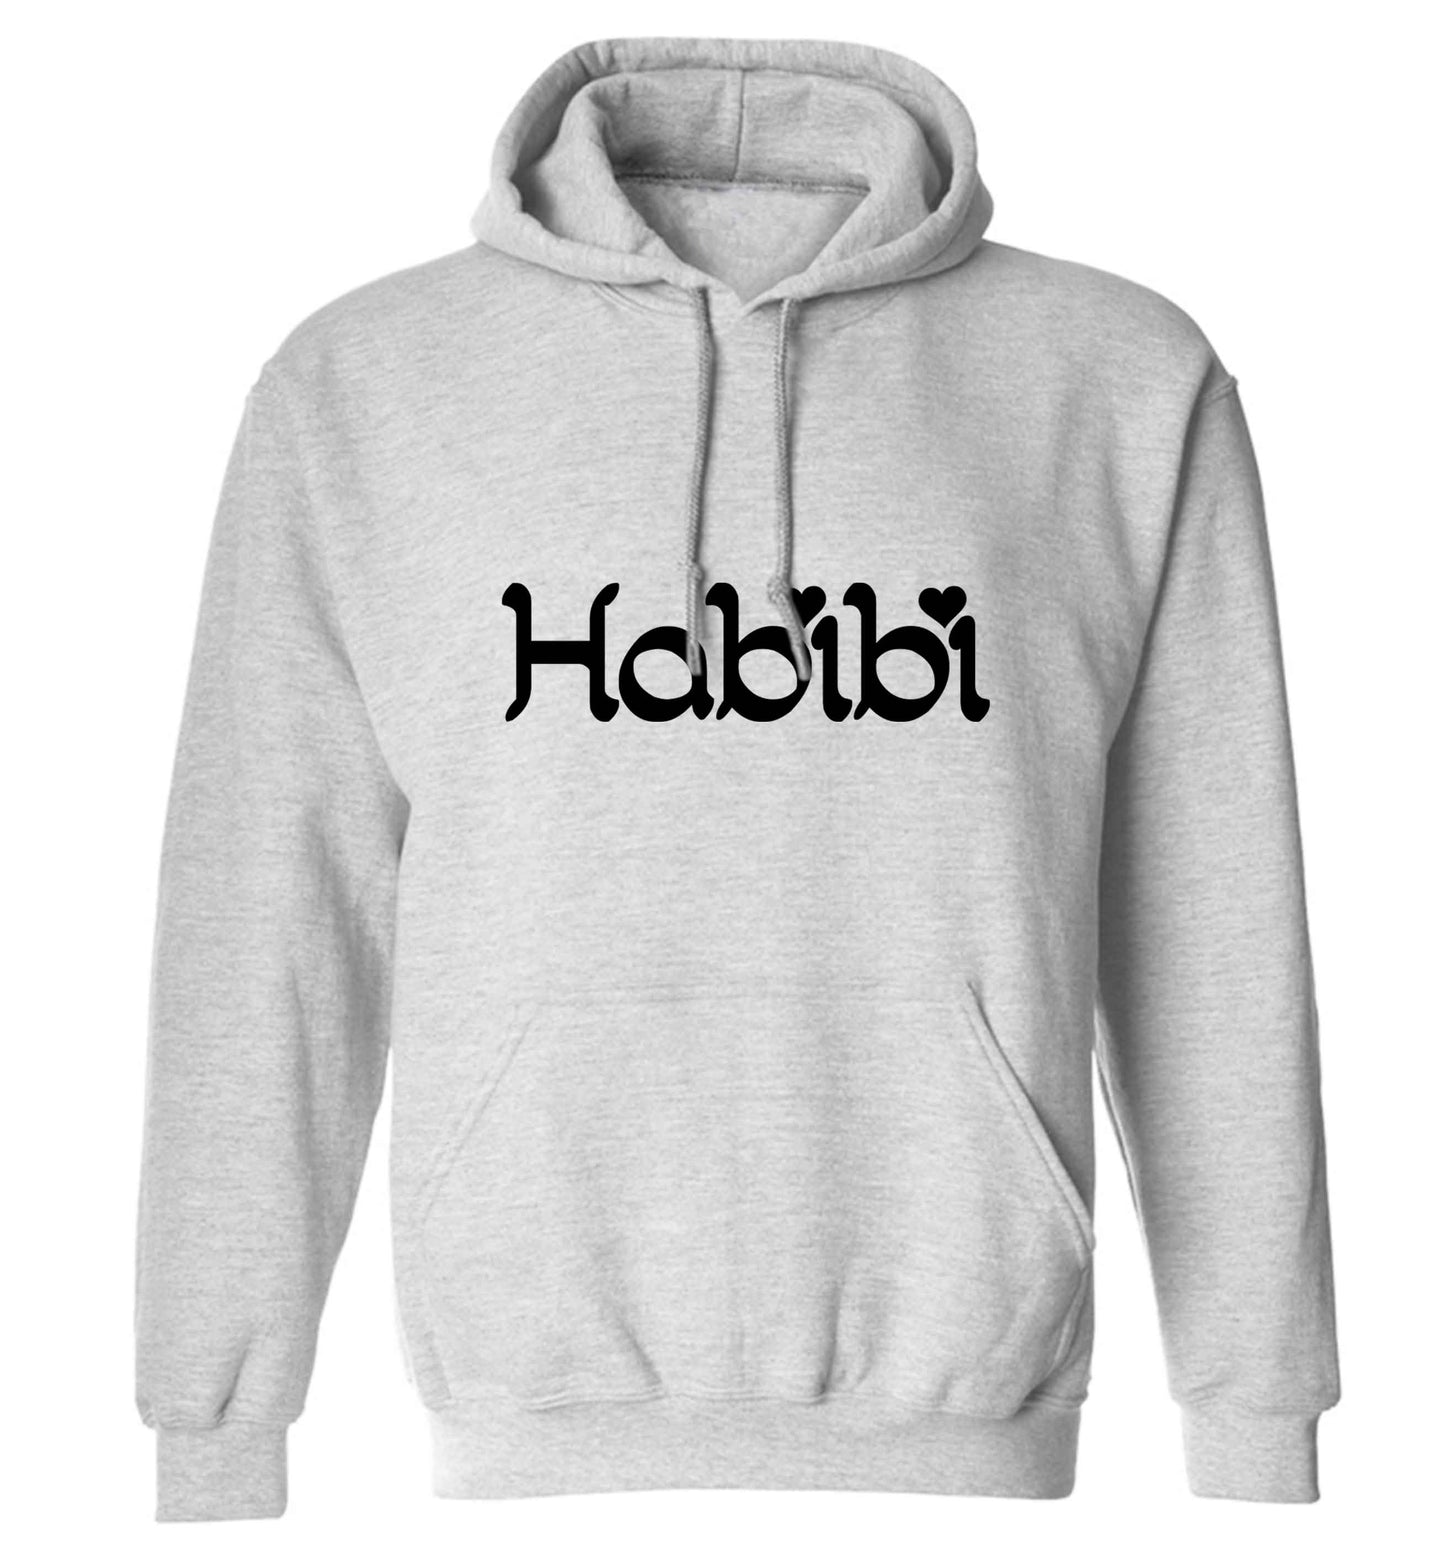 Habibi adults unisex grey hoodie 2XL